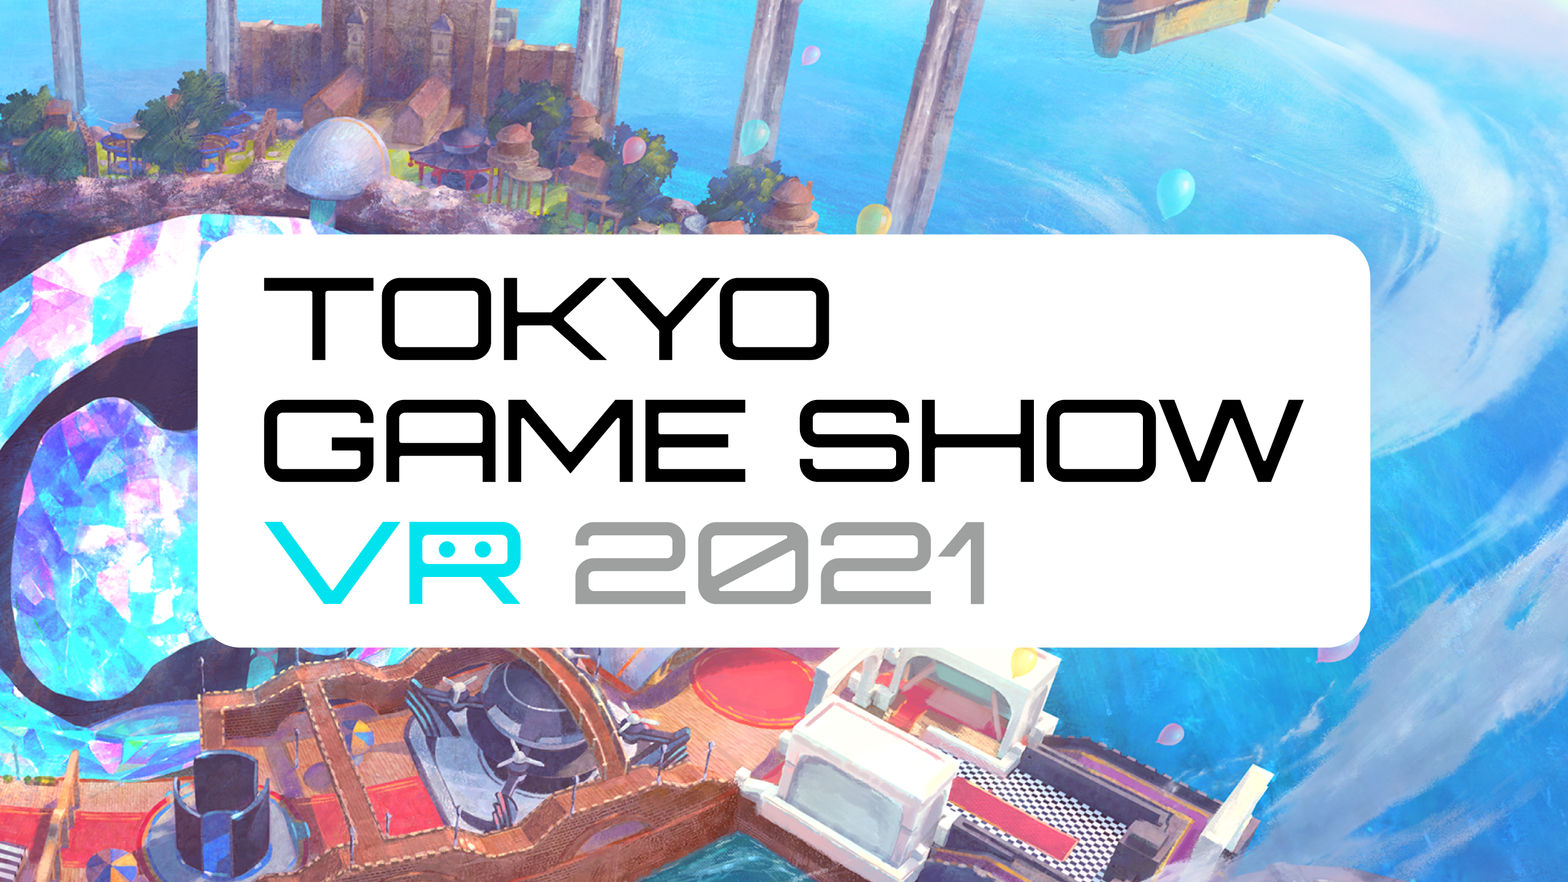 TOKYO GAME SHOW VR 2021 